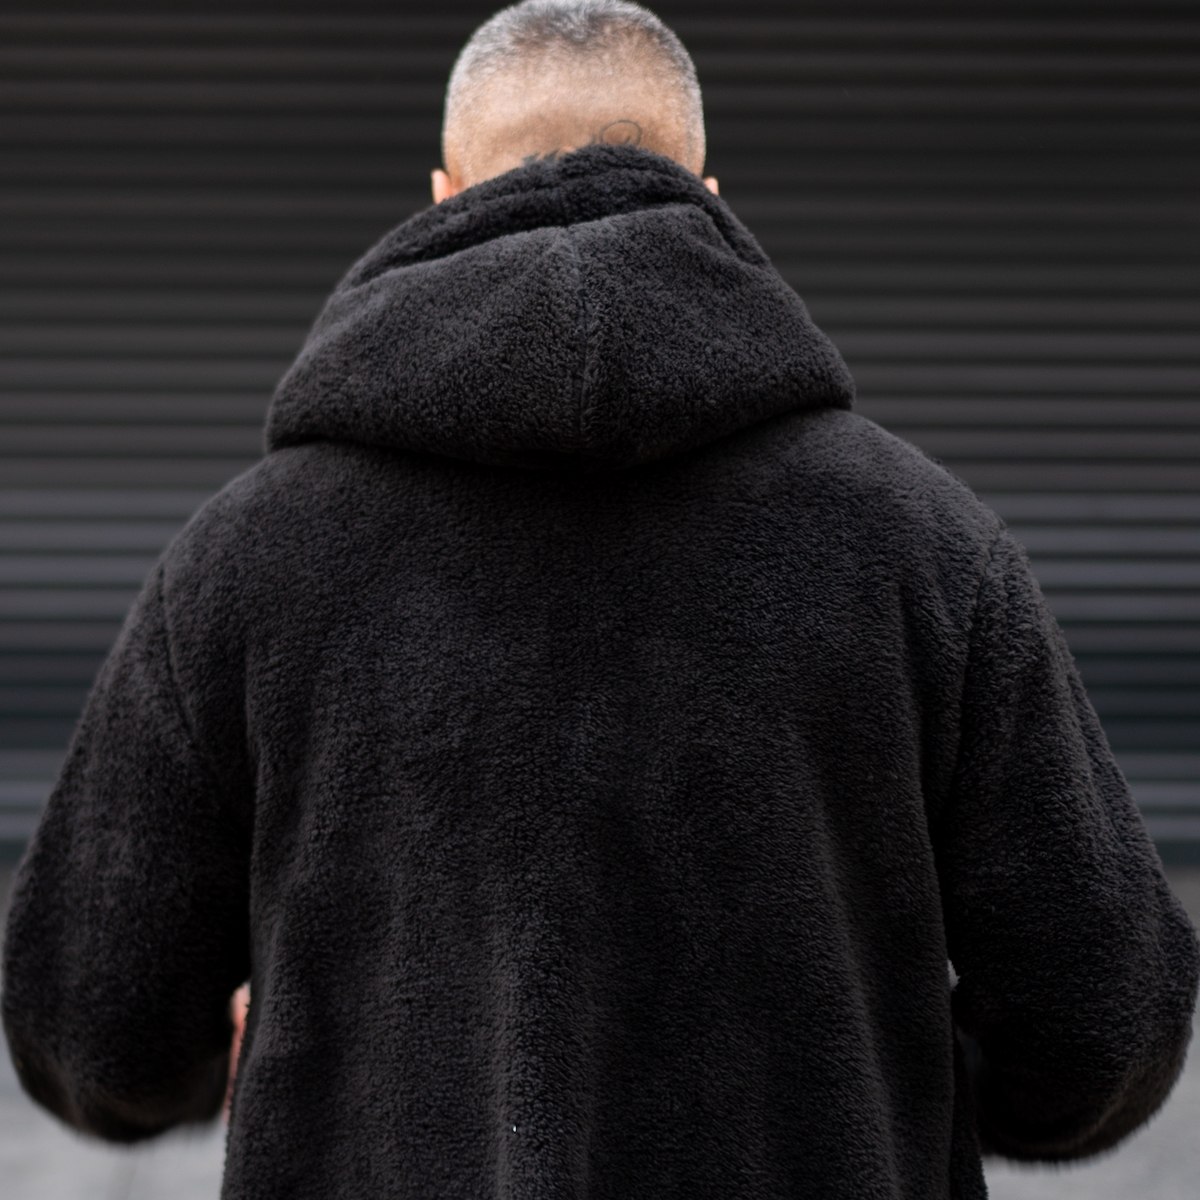 Men's Oversized Cardigan Fleece With Pocket Black | Martin Valen